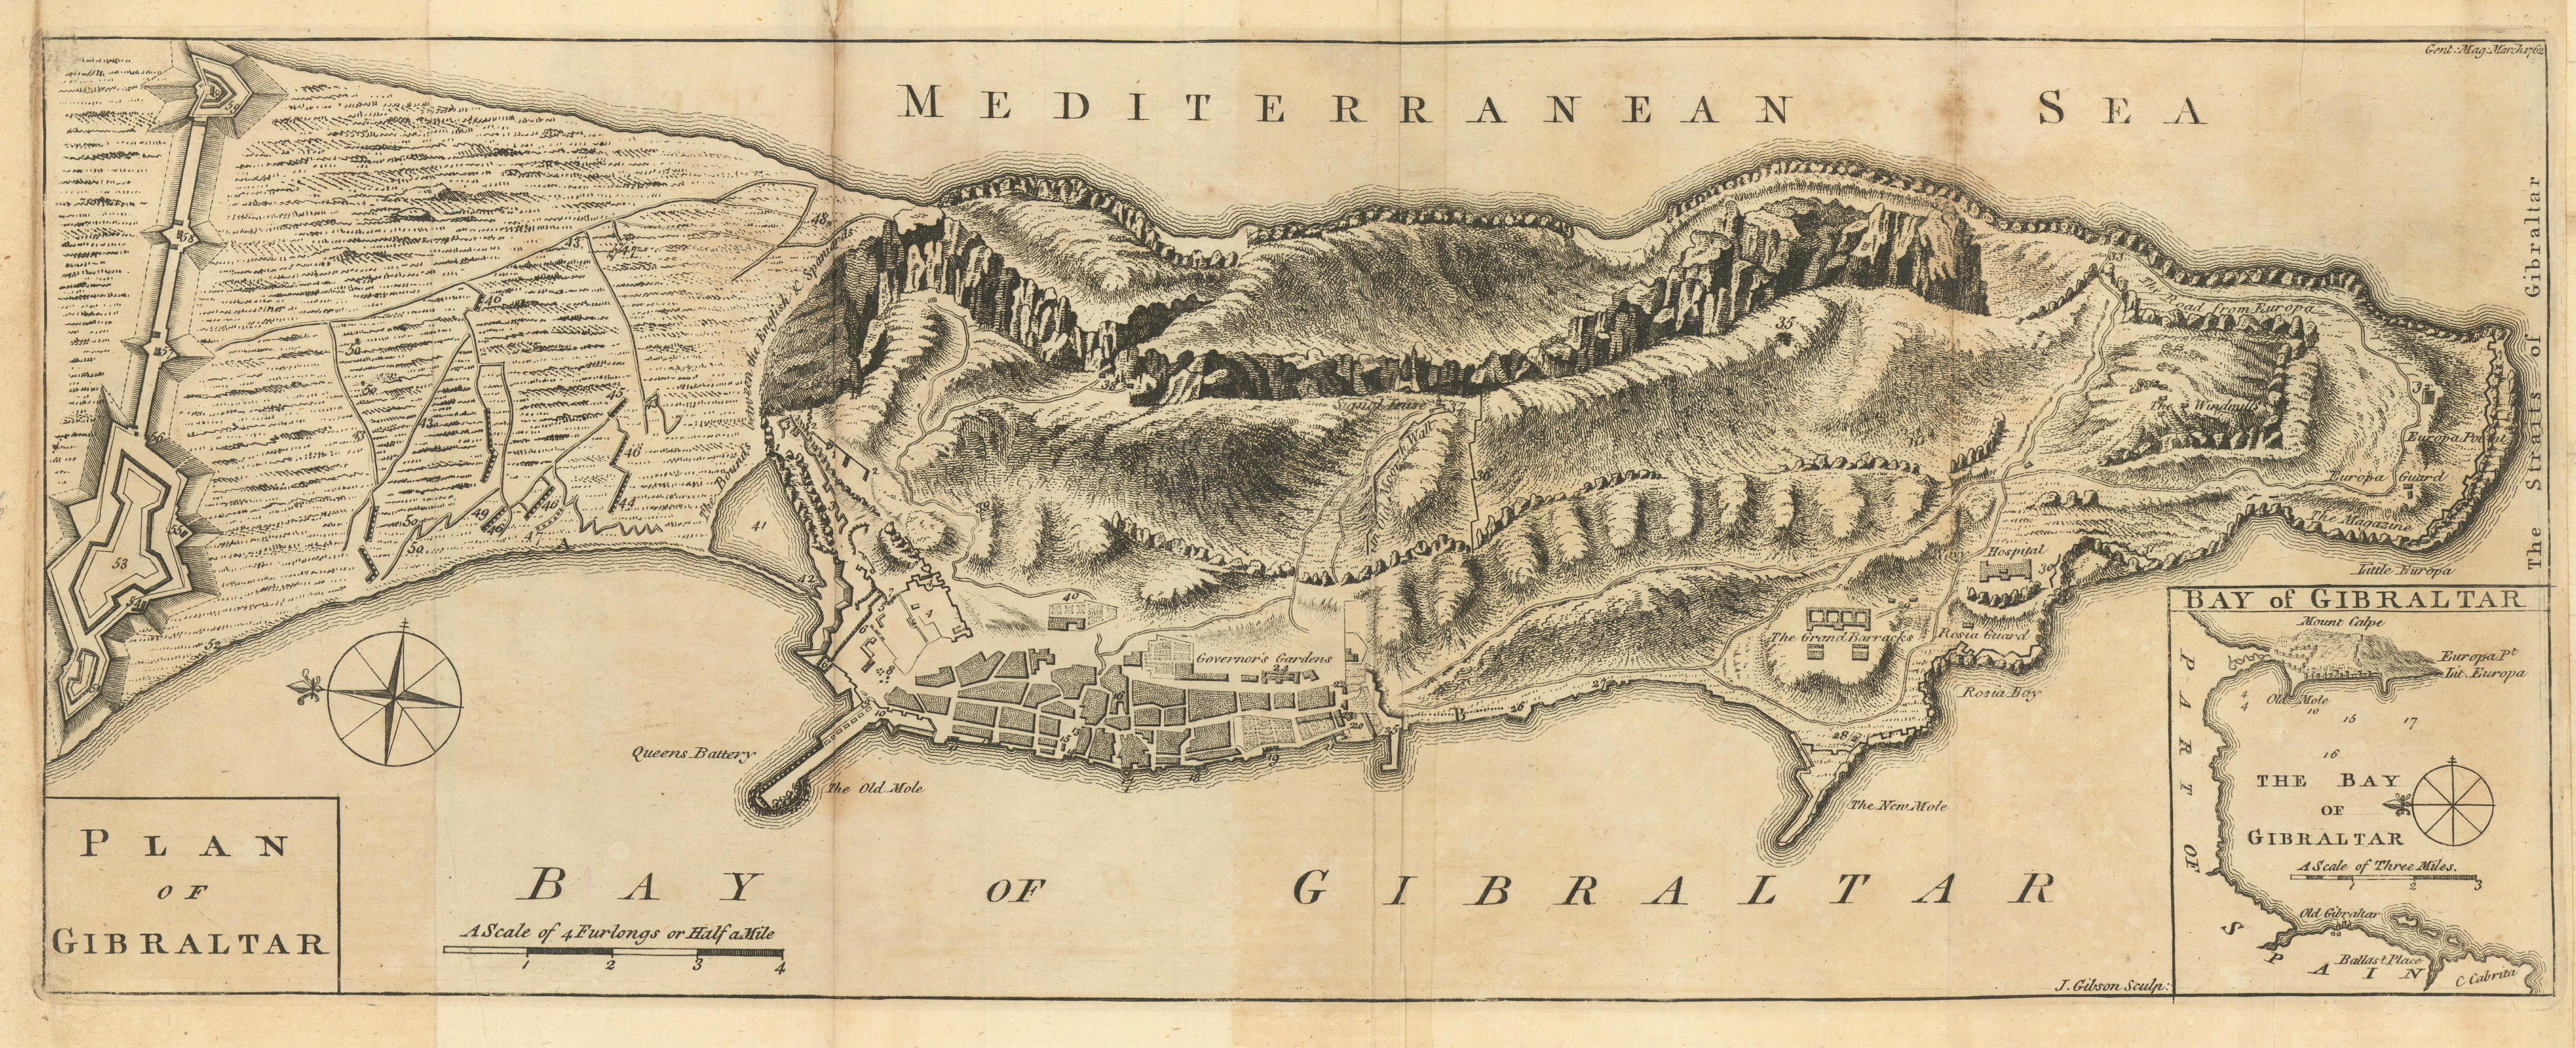 Associate Product Plan of Gibraltar by John Gibson. Gentleman's Magazine 1762 old antique map